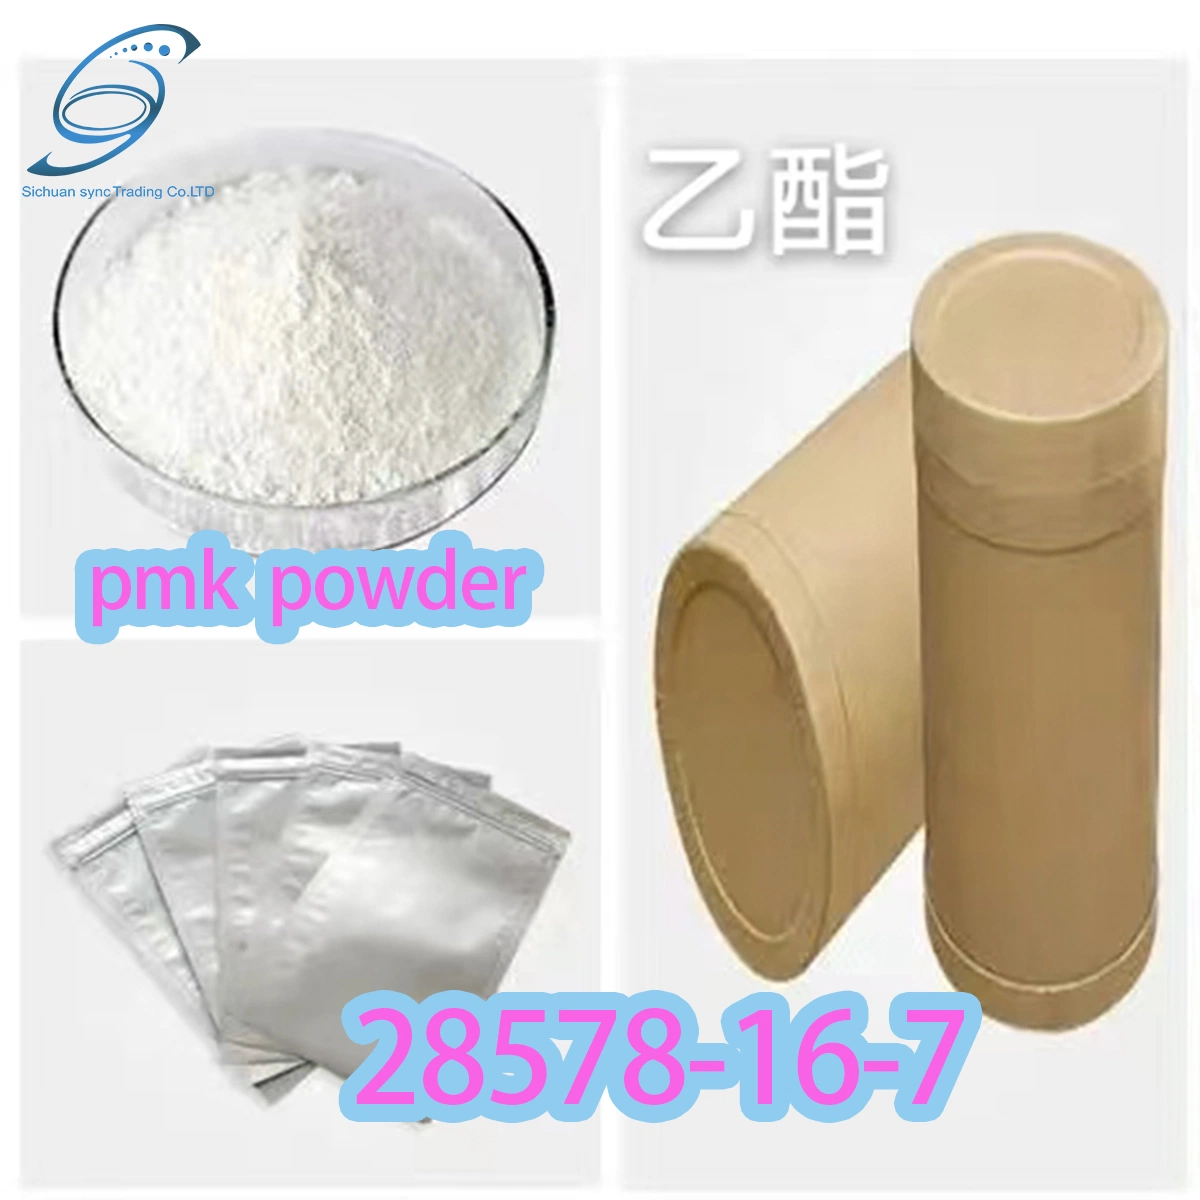 Pmk High quality/High cost performance Factory Pmk Ethyl Glycidate/White Pmk Powder Pmk Oil Customizable/28578-16-7